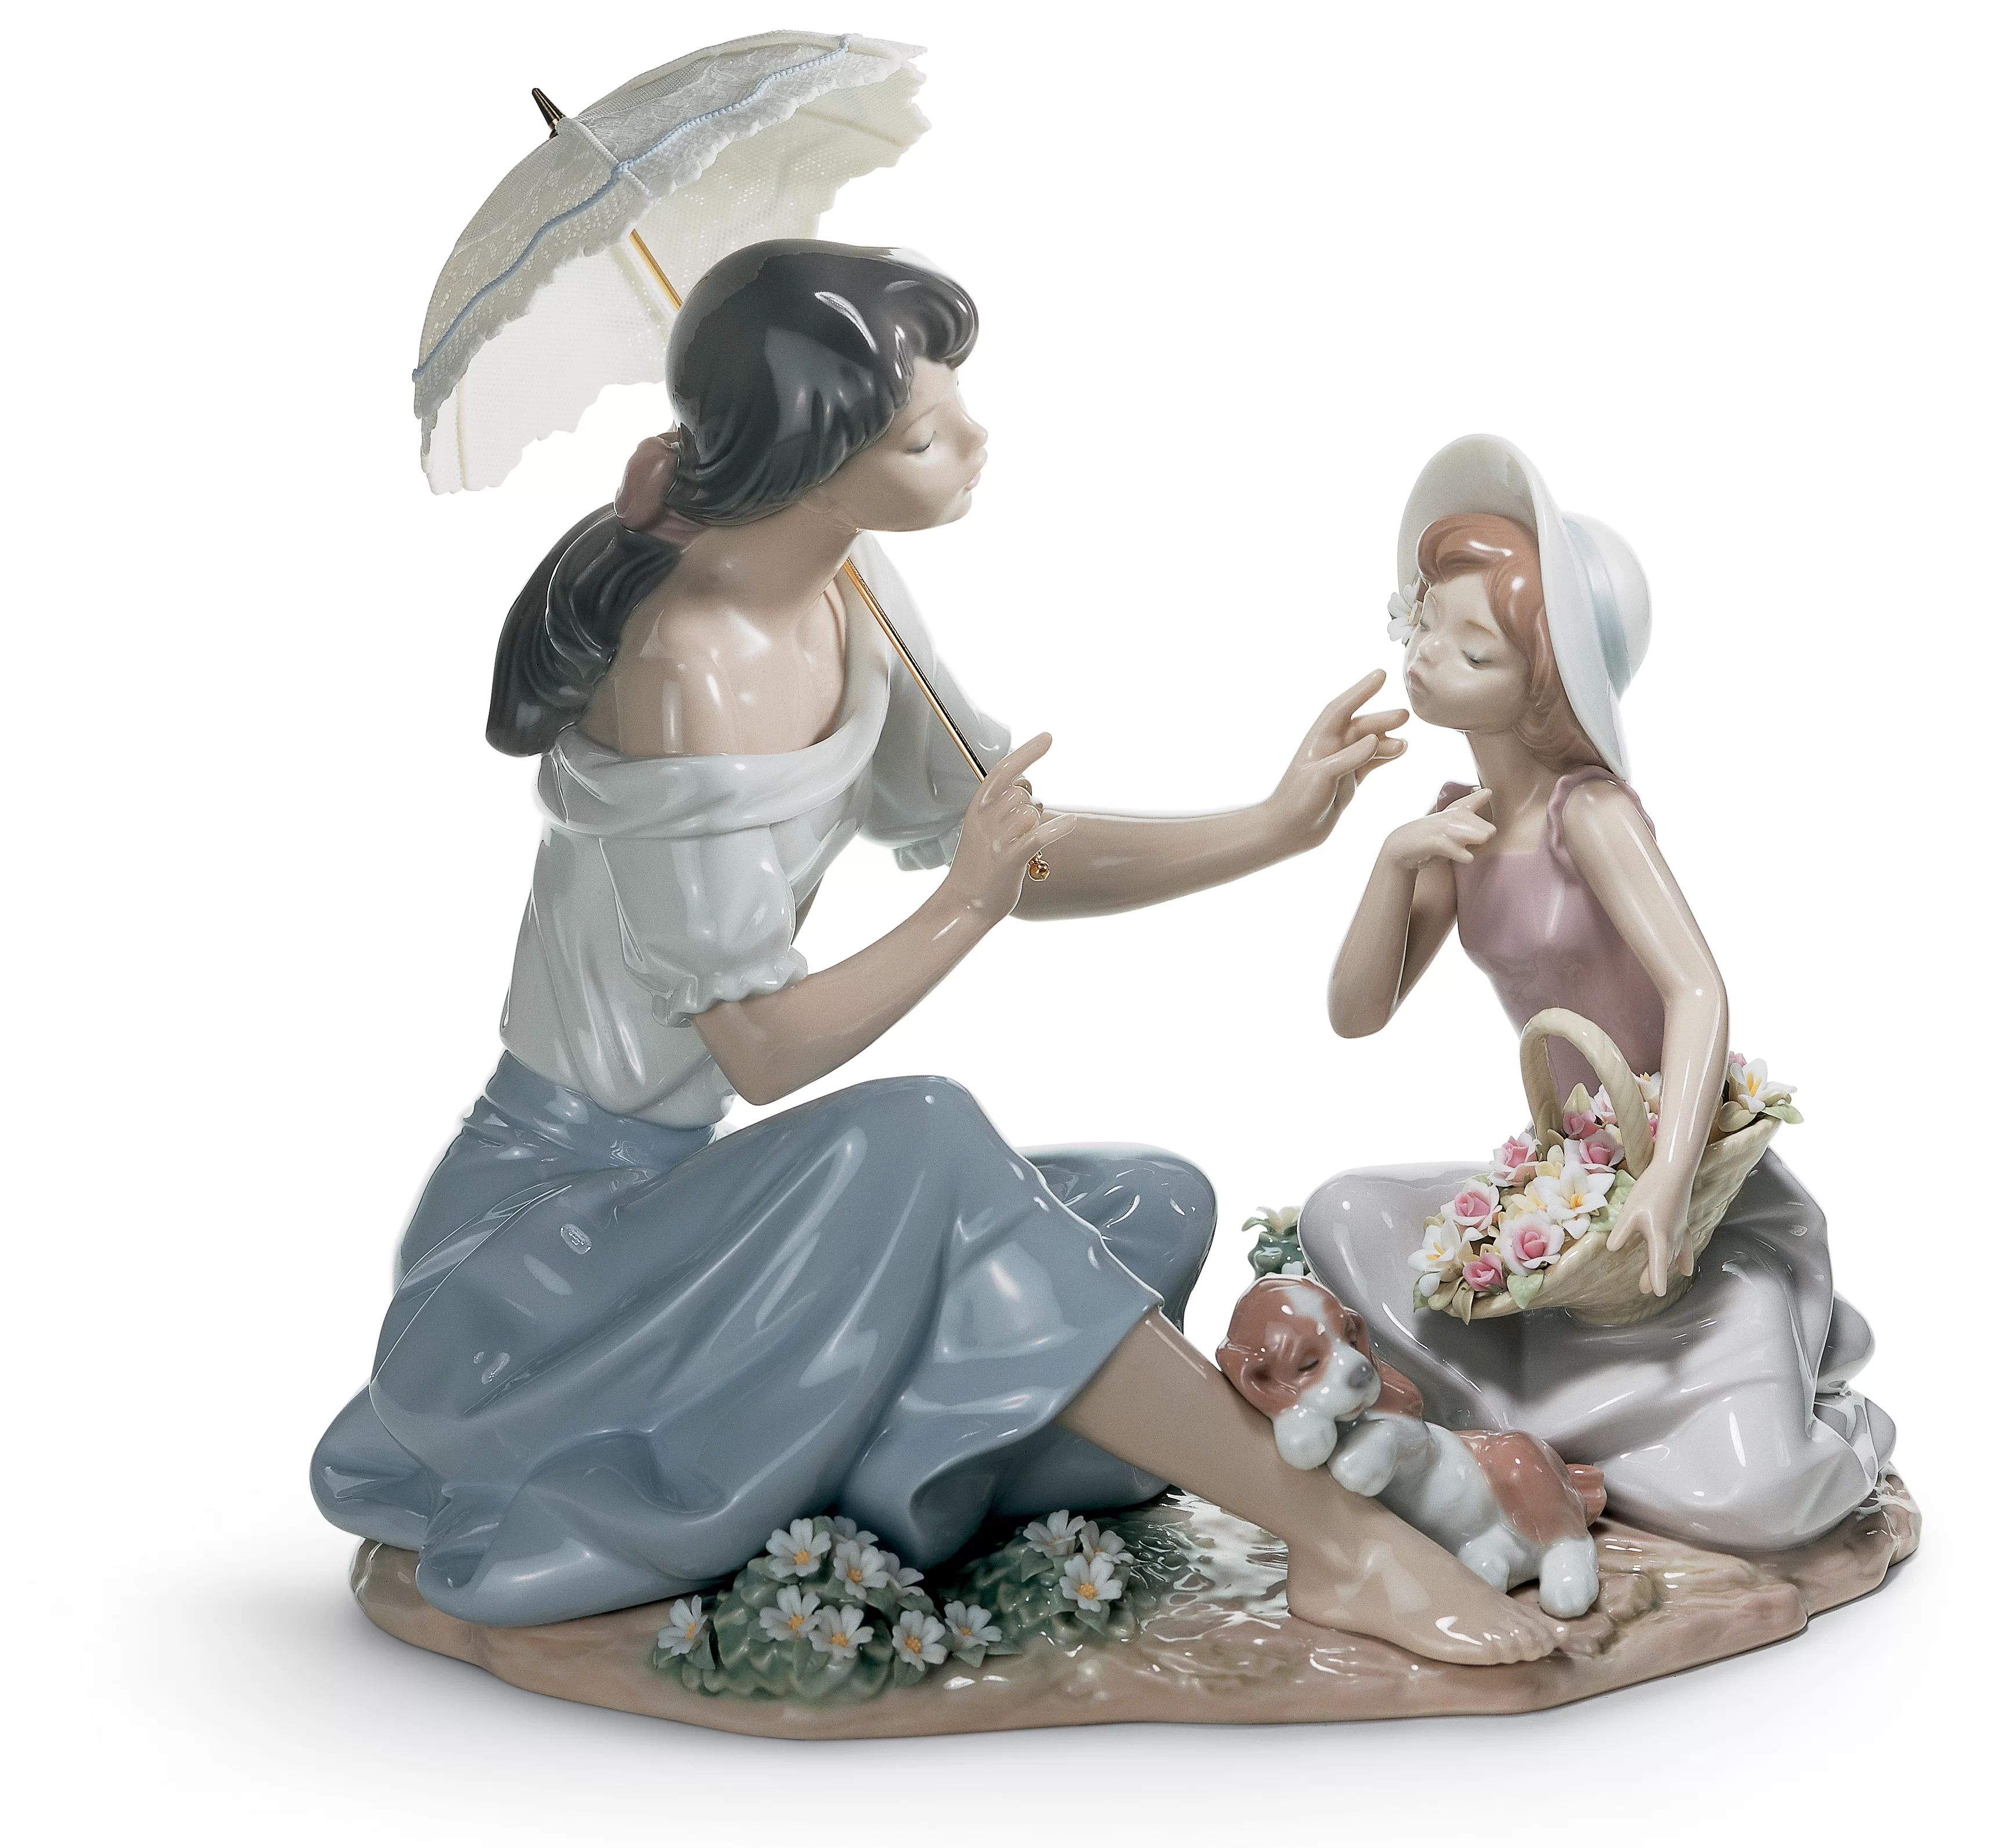 Lladro Handmade Figurines & Sculptures | Wayfair | Wayfair North America